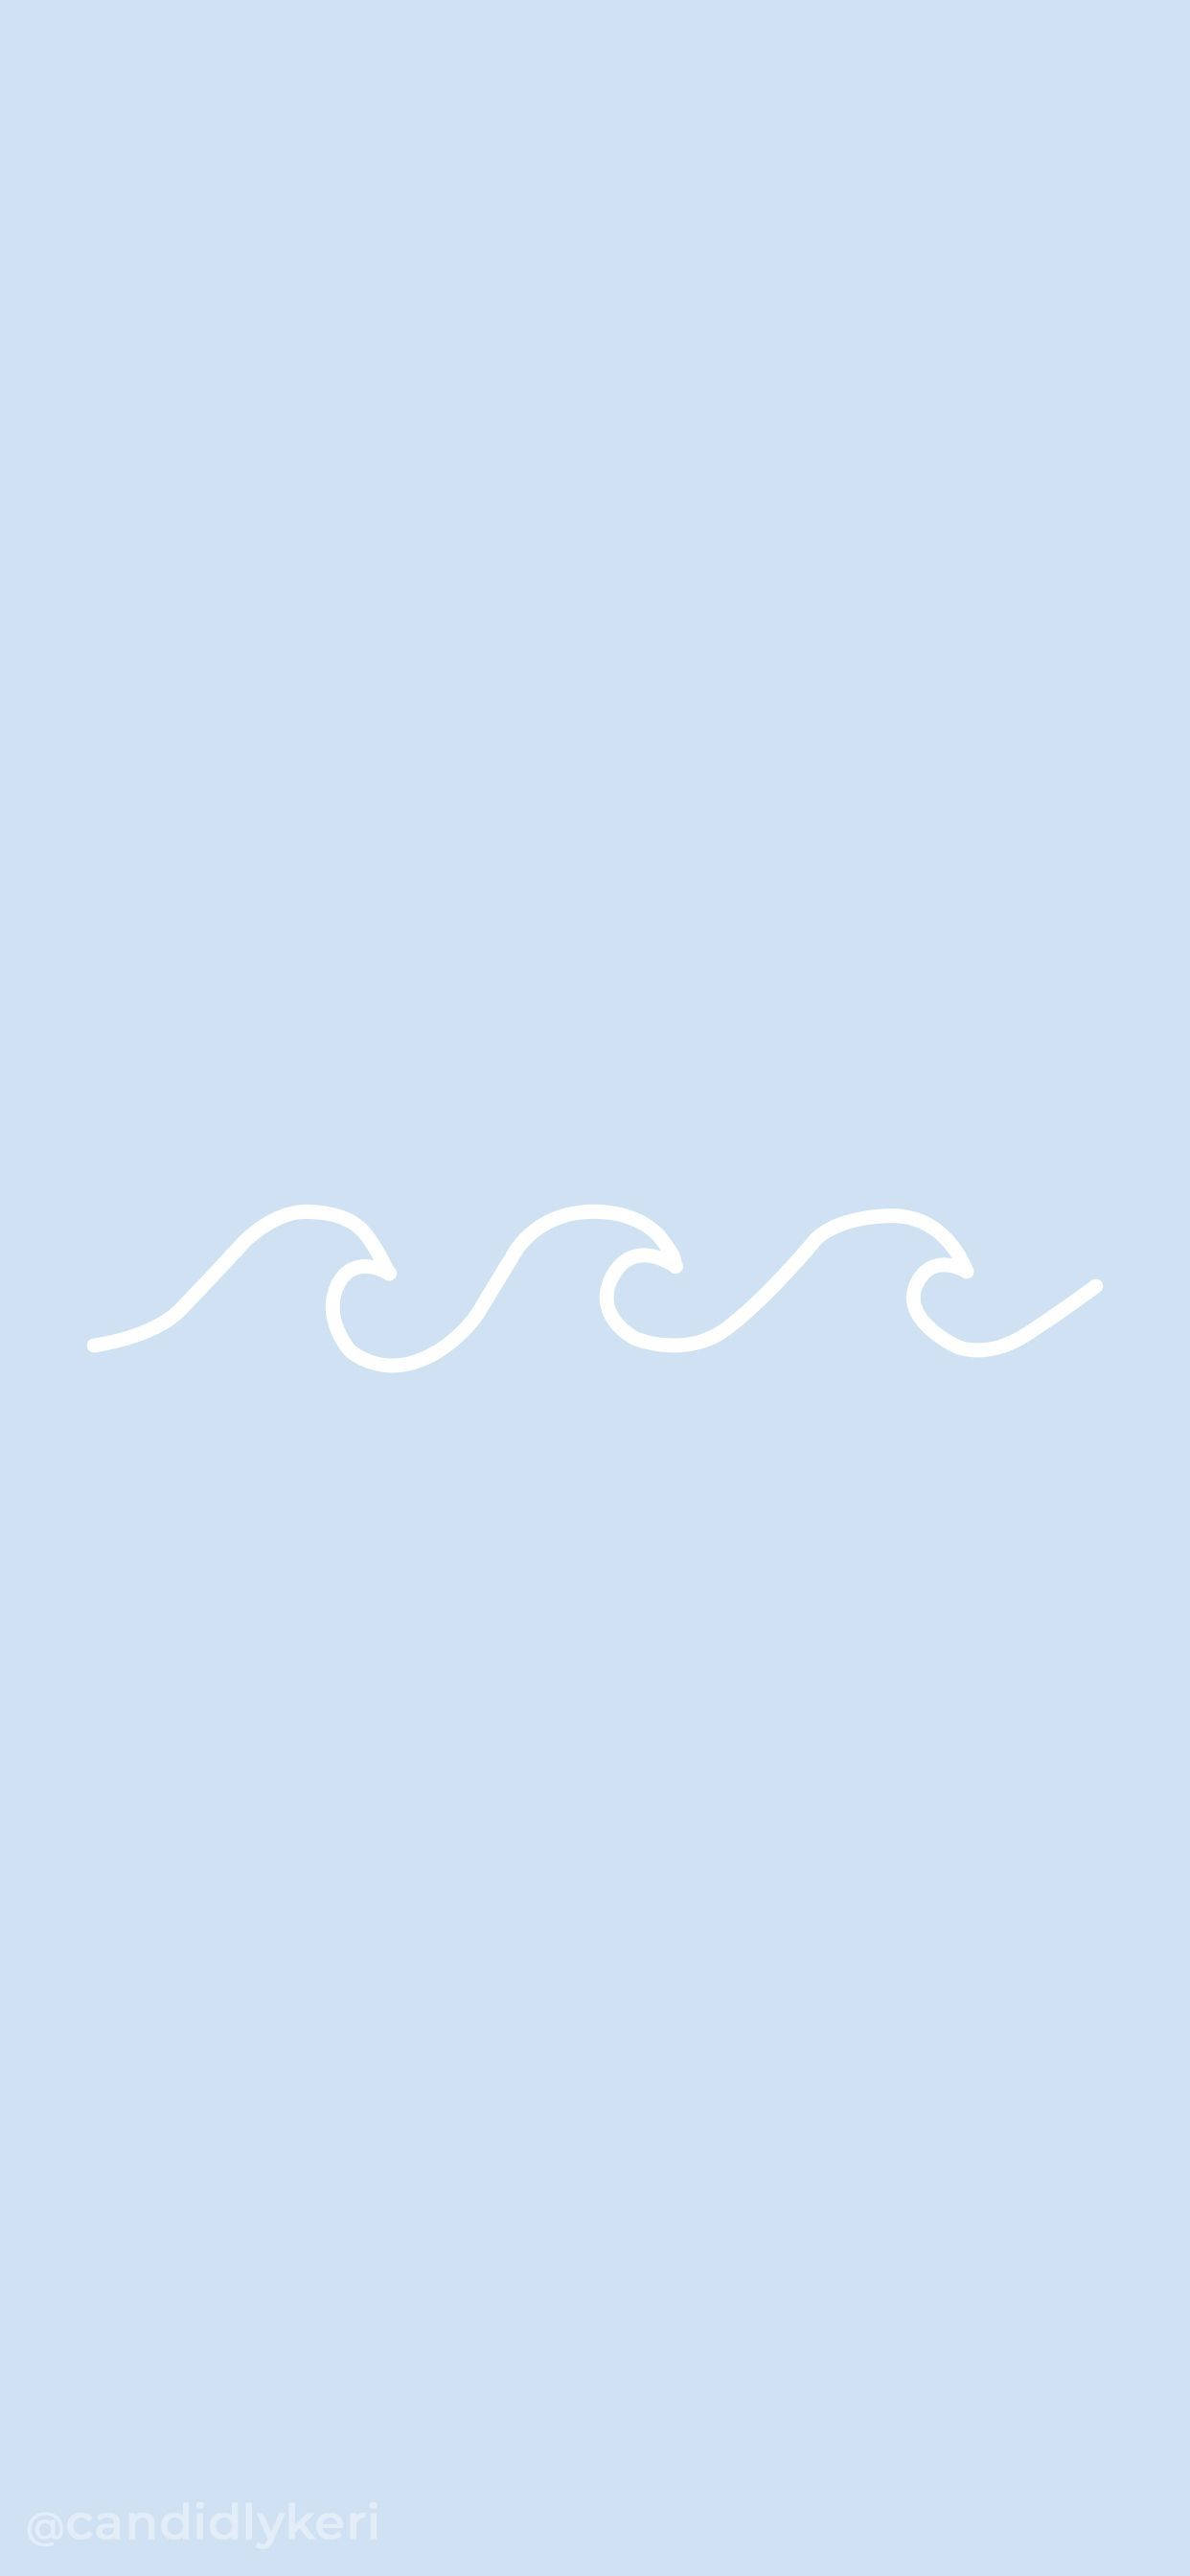 Download Blue Pastel Aesthetic Minimalist Waves Wallpaper | Wallpapers.com